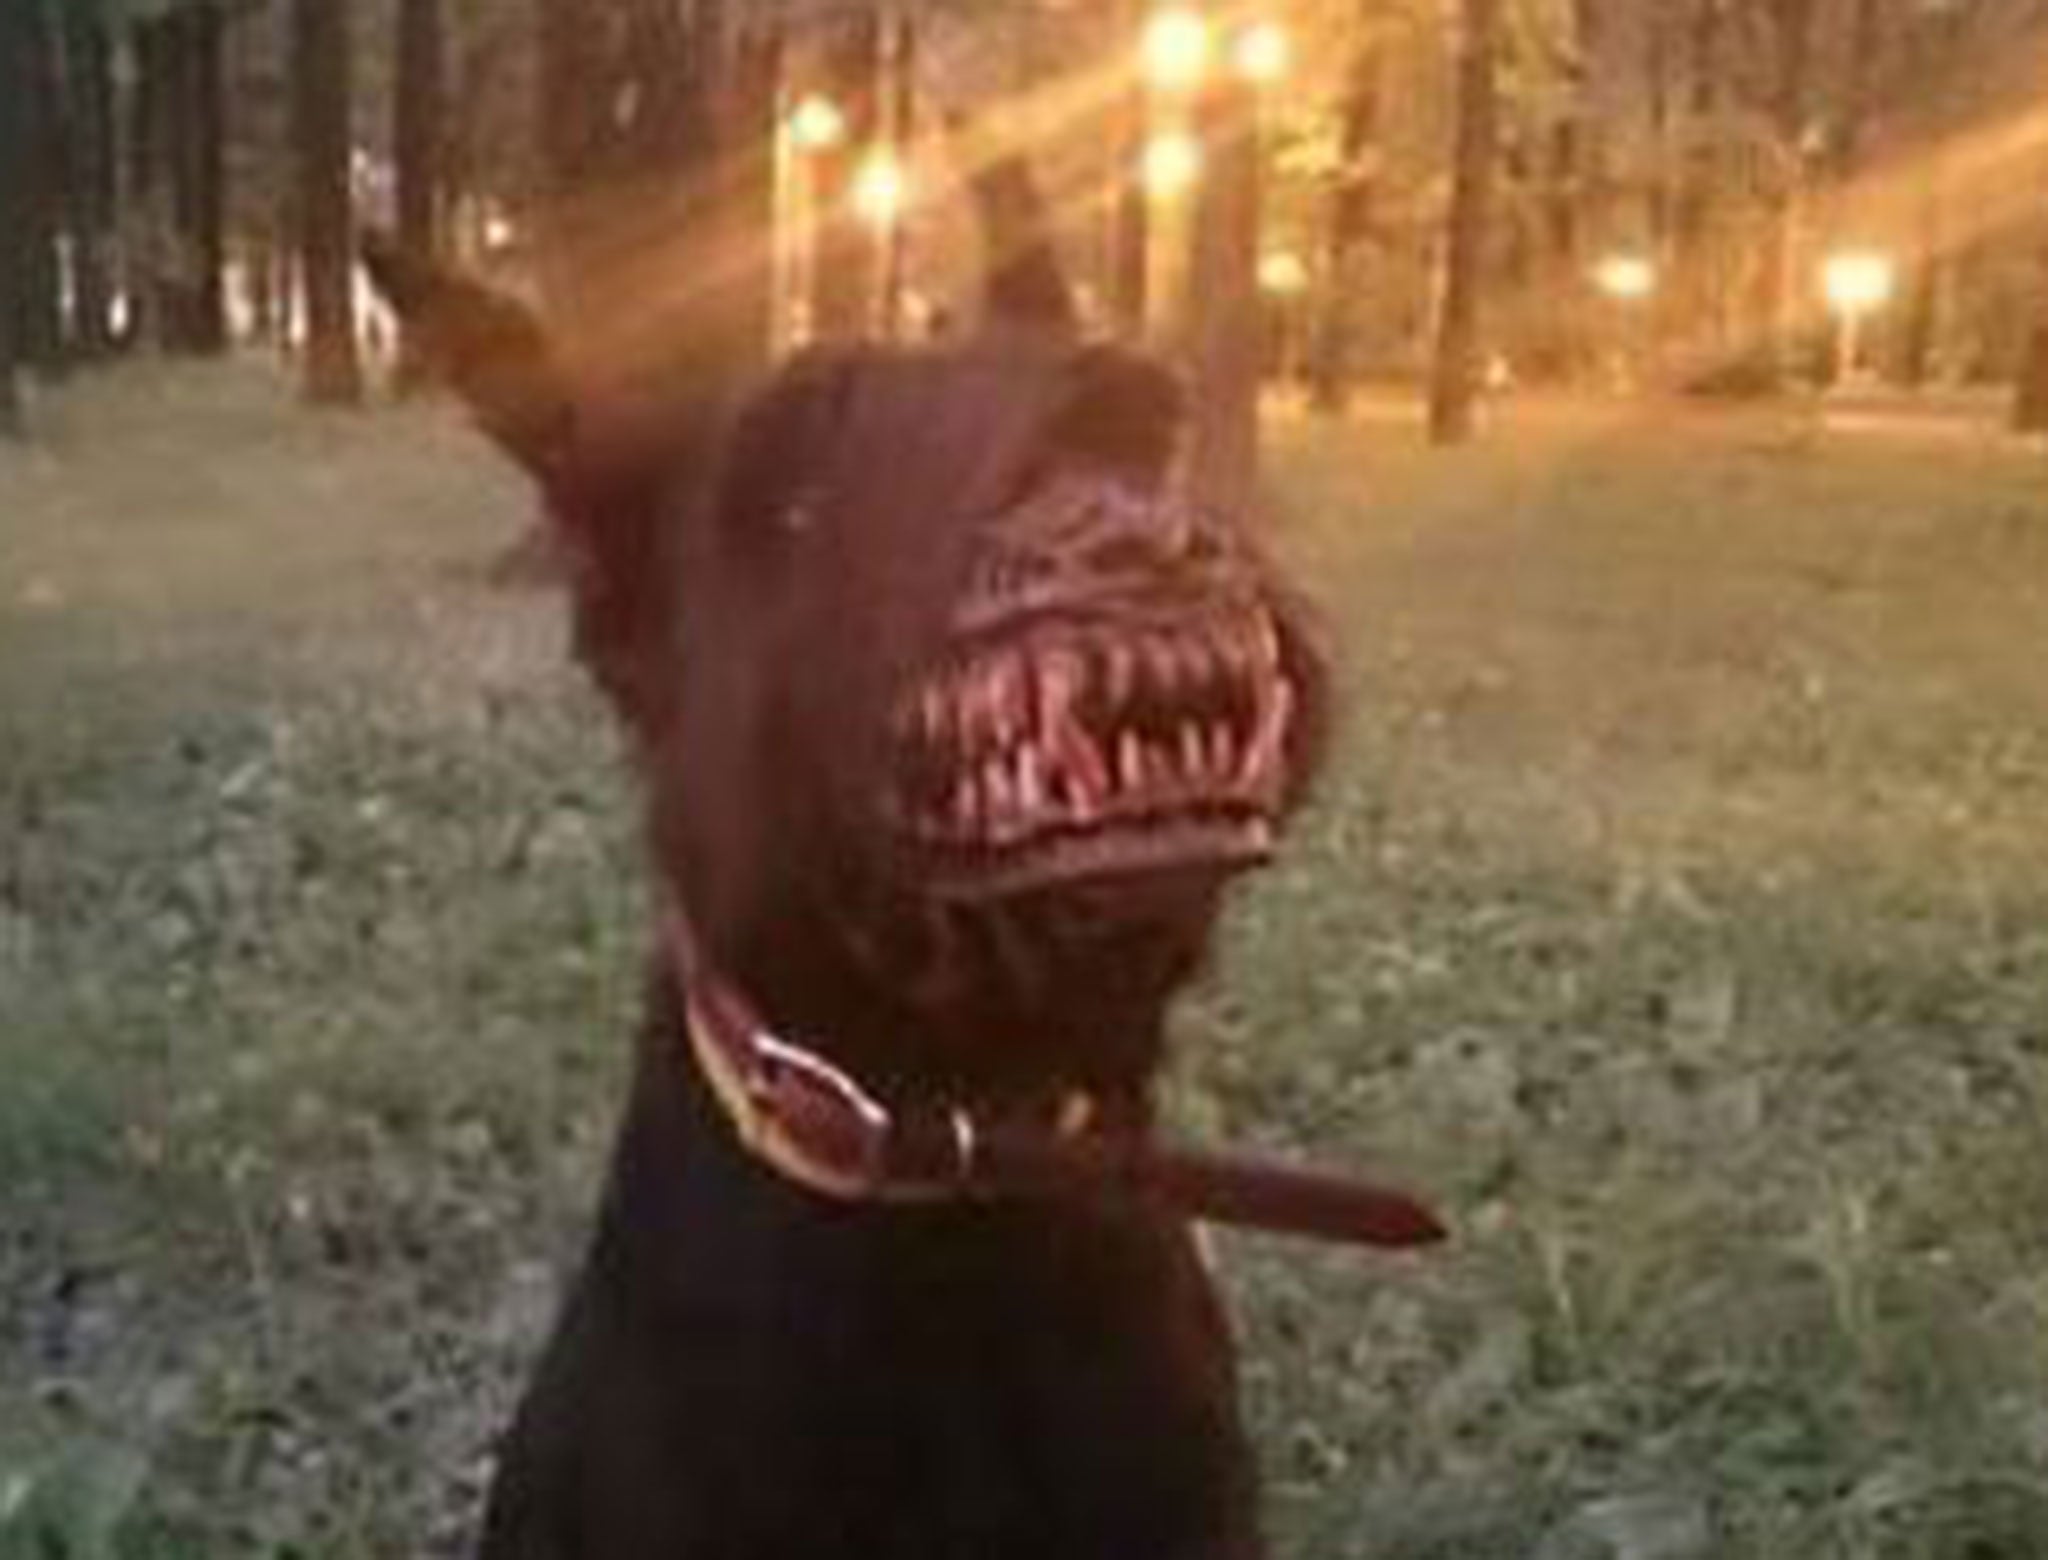 monster dog muzzle